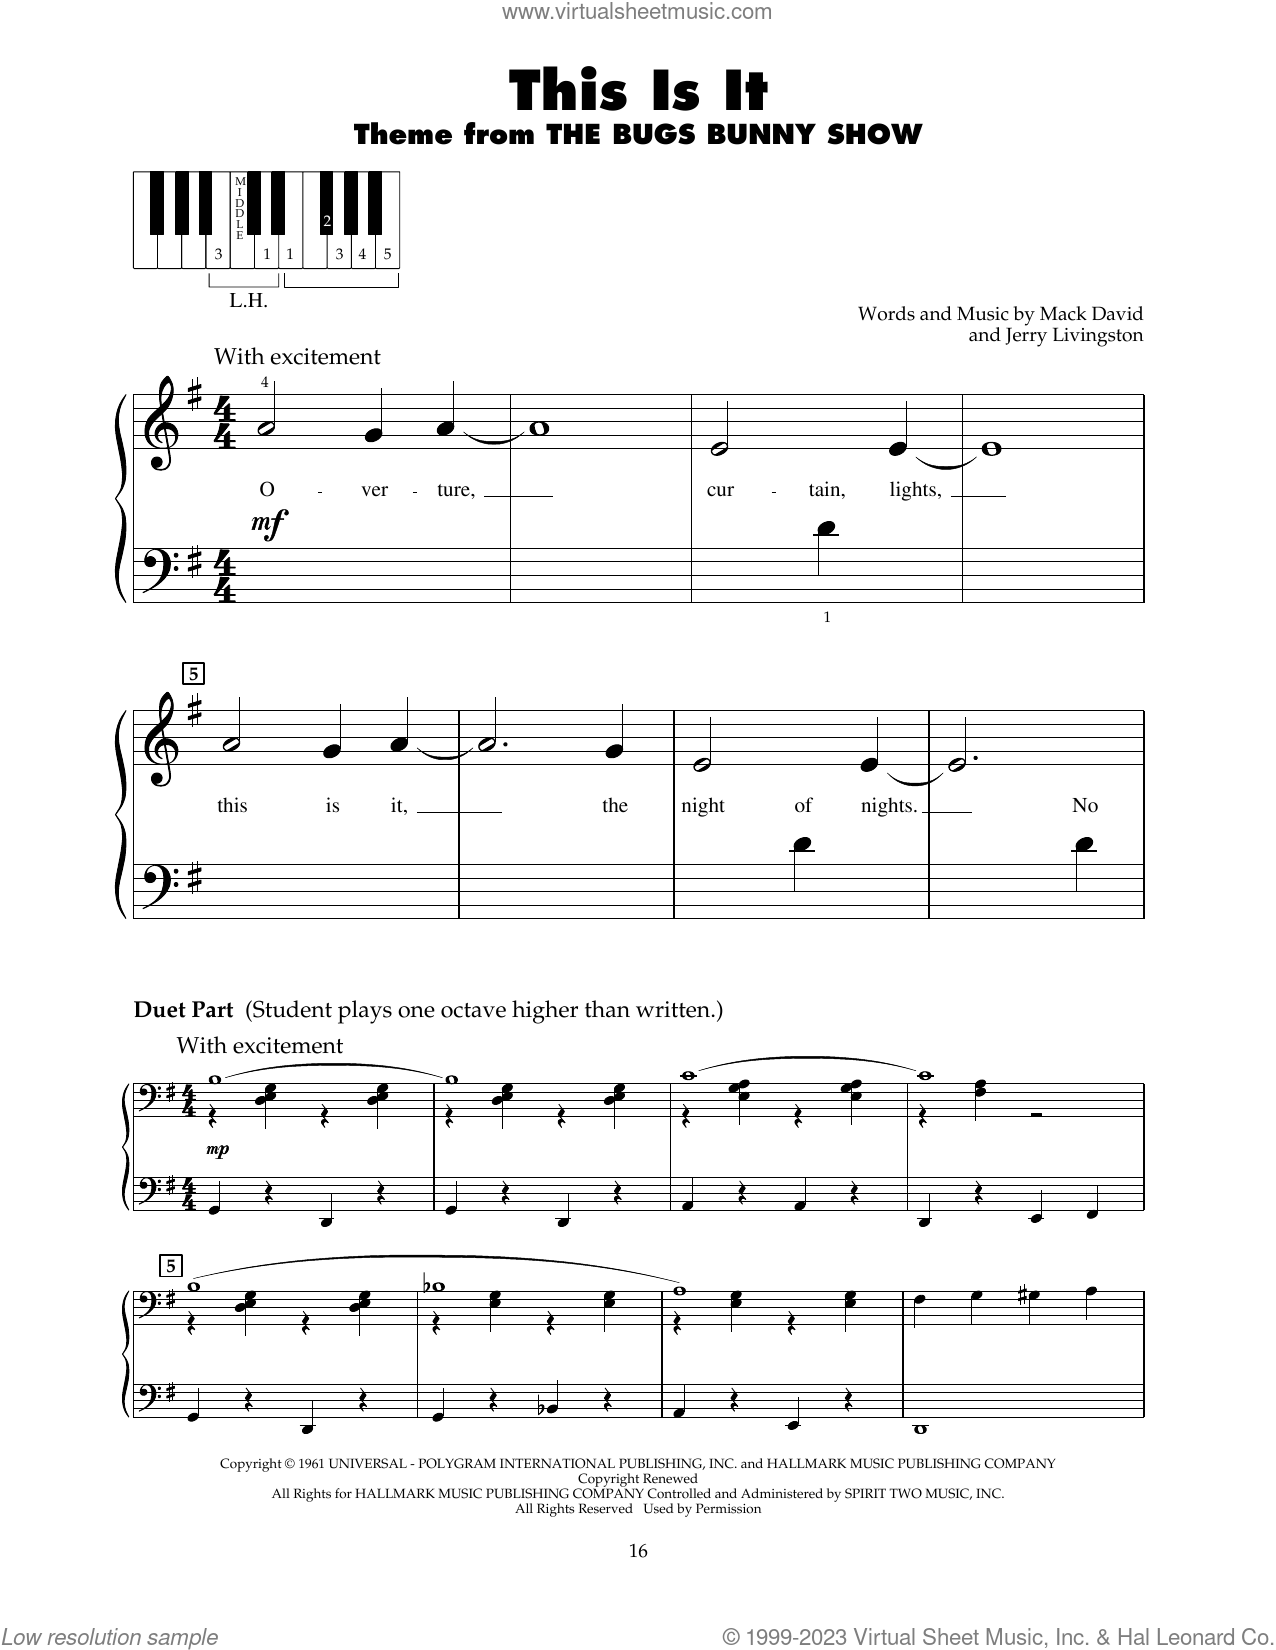 Daylight – David Kushner (accompaniment) Sheet music for Piano (Solo) Easy